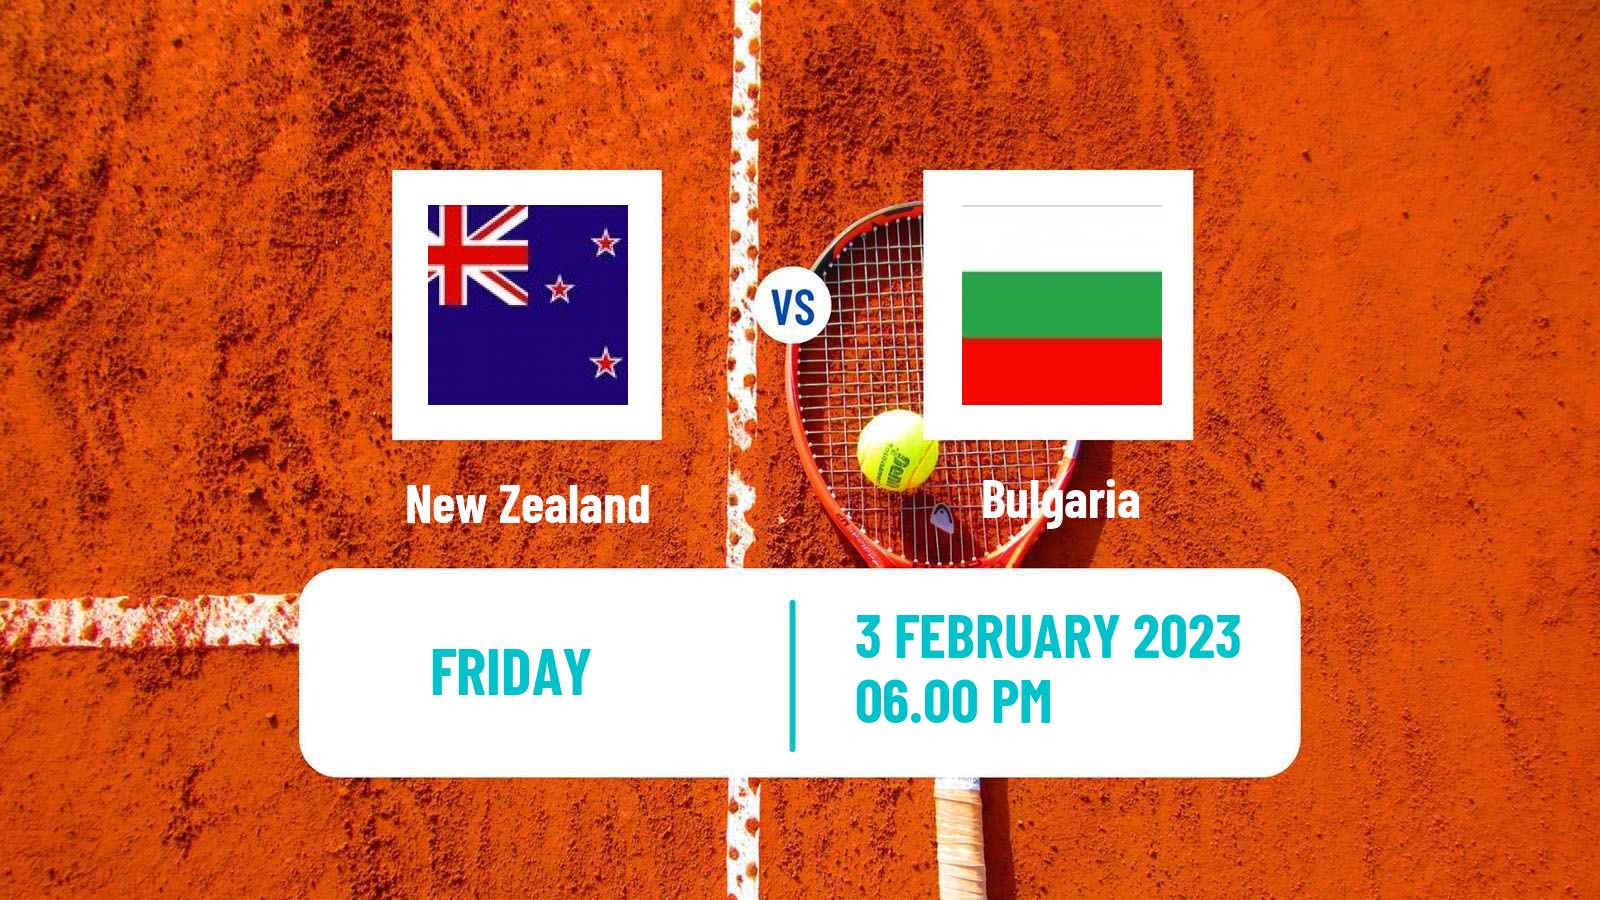 Tennis Davis Cup World Group I Teams New Zealand - Bulgaria